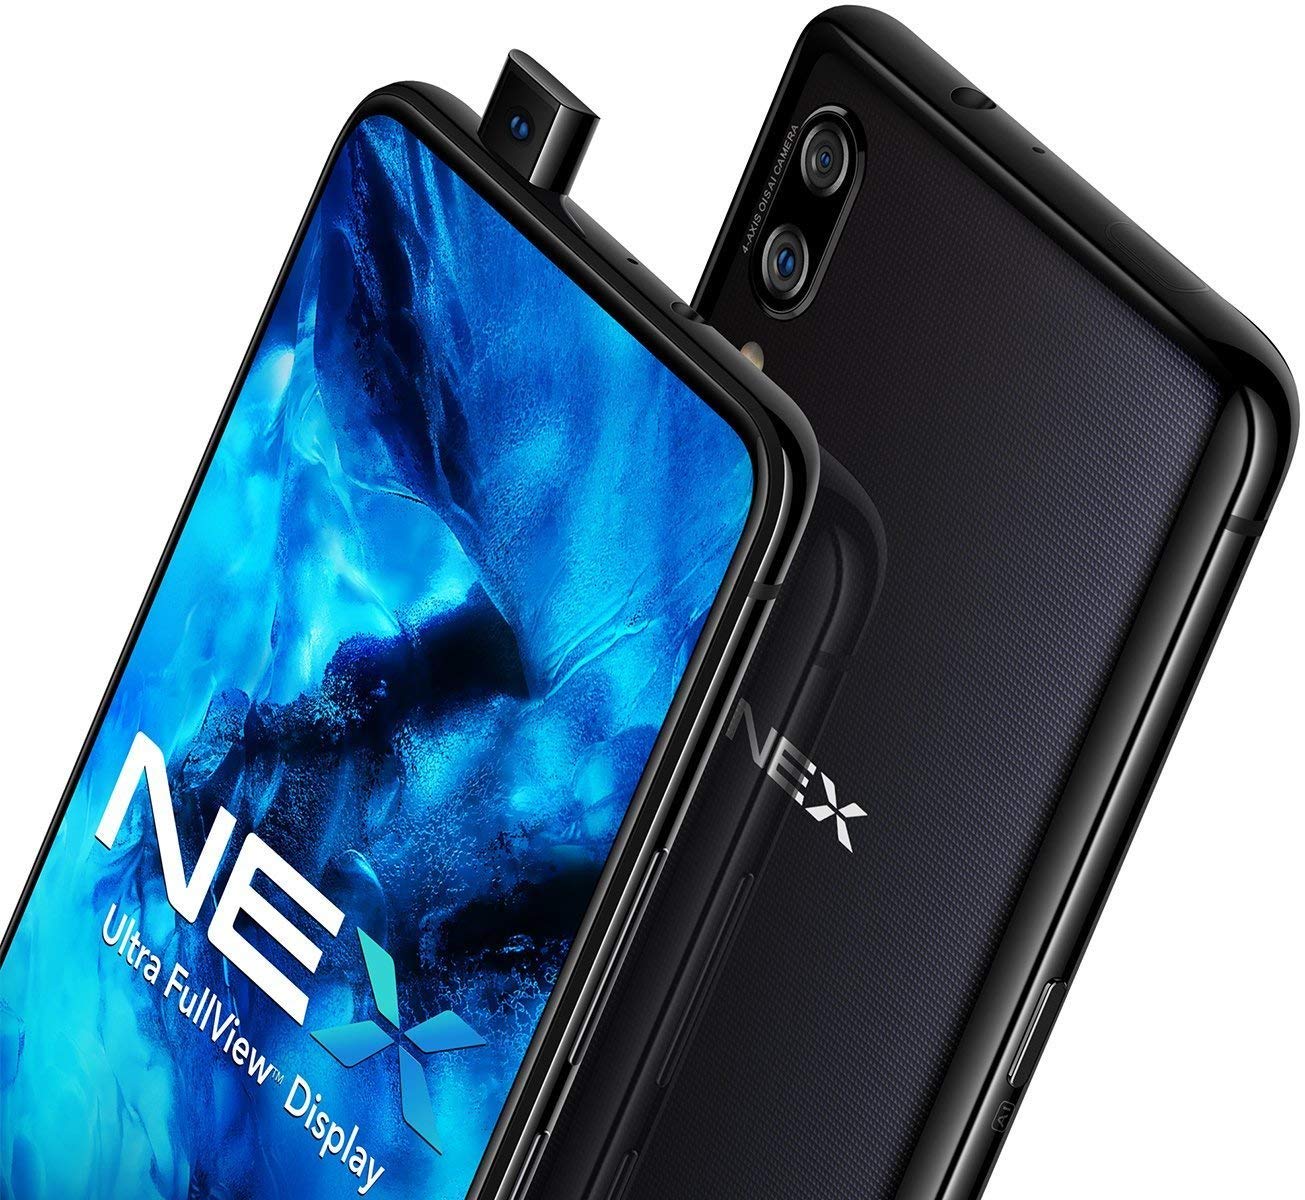 vivo-nex-8gb-mobile-phone-ultra-view-display